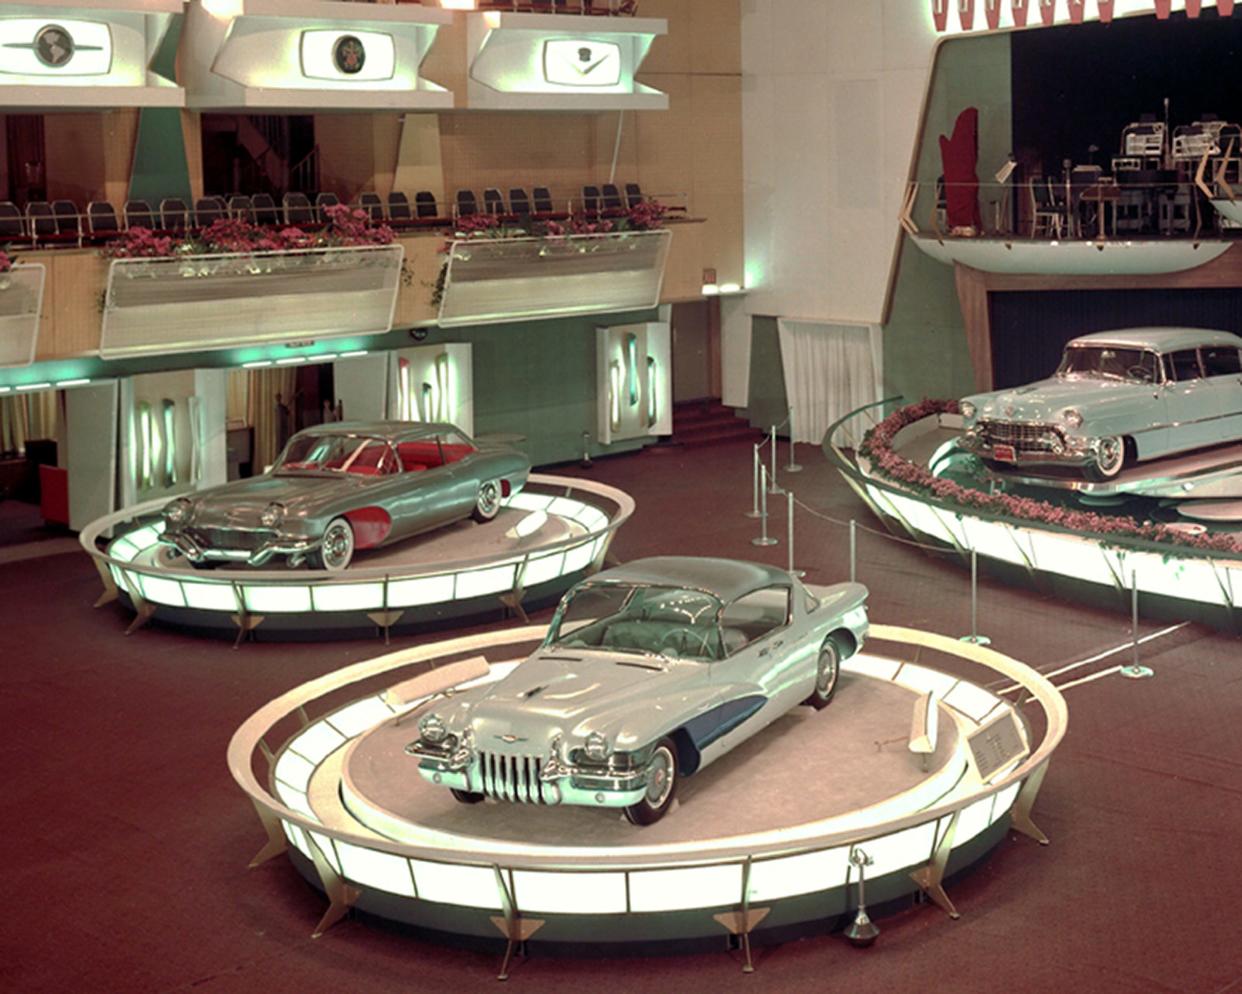 The 1955 General Motors Motorama in the ballroom of the Waldorf Astoria Hotel in New York